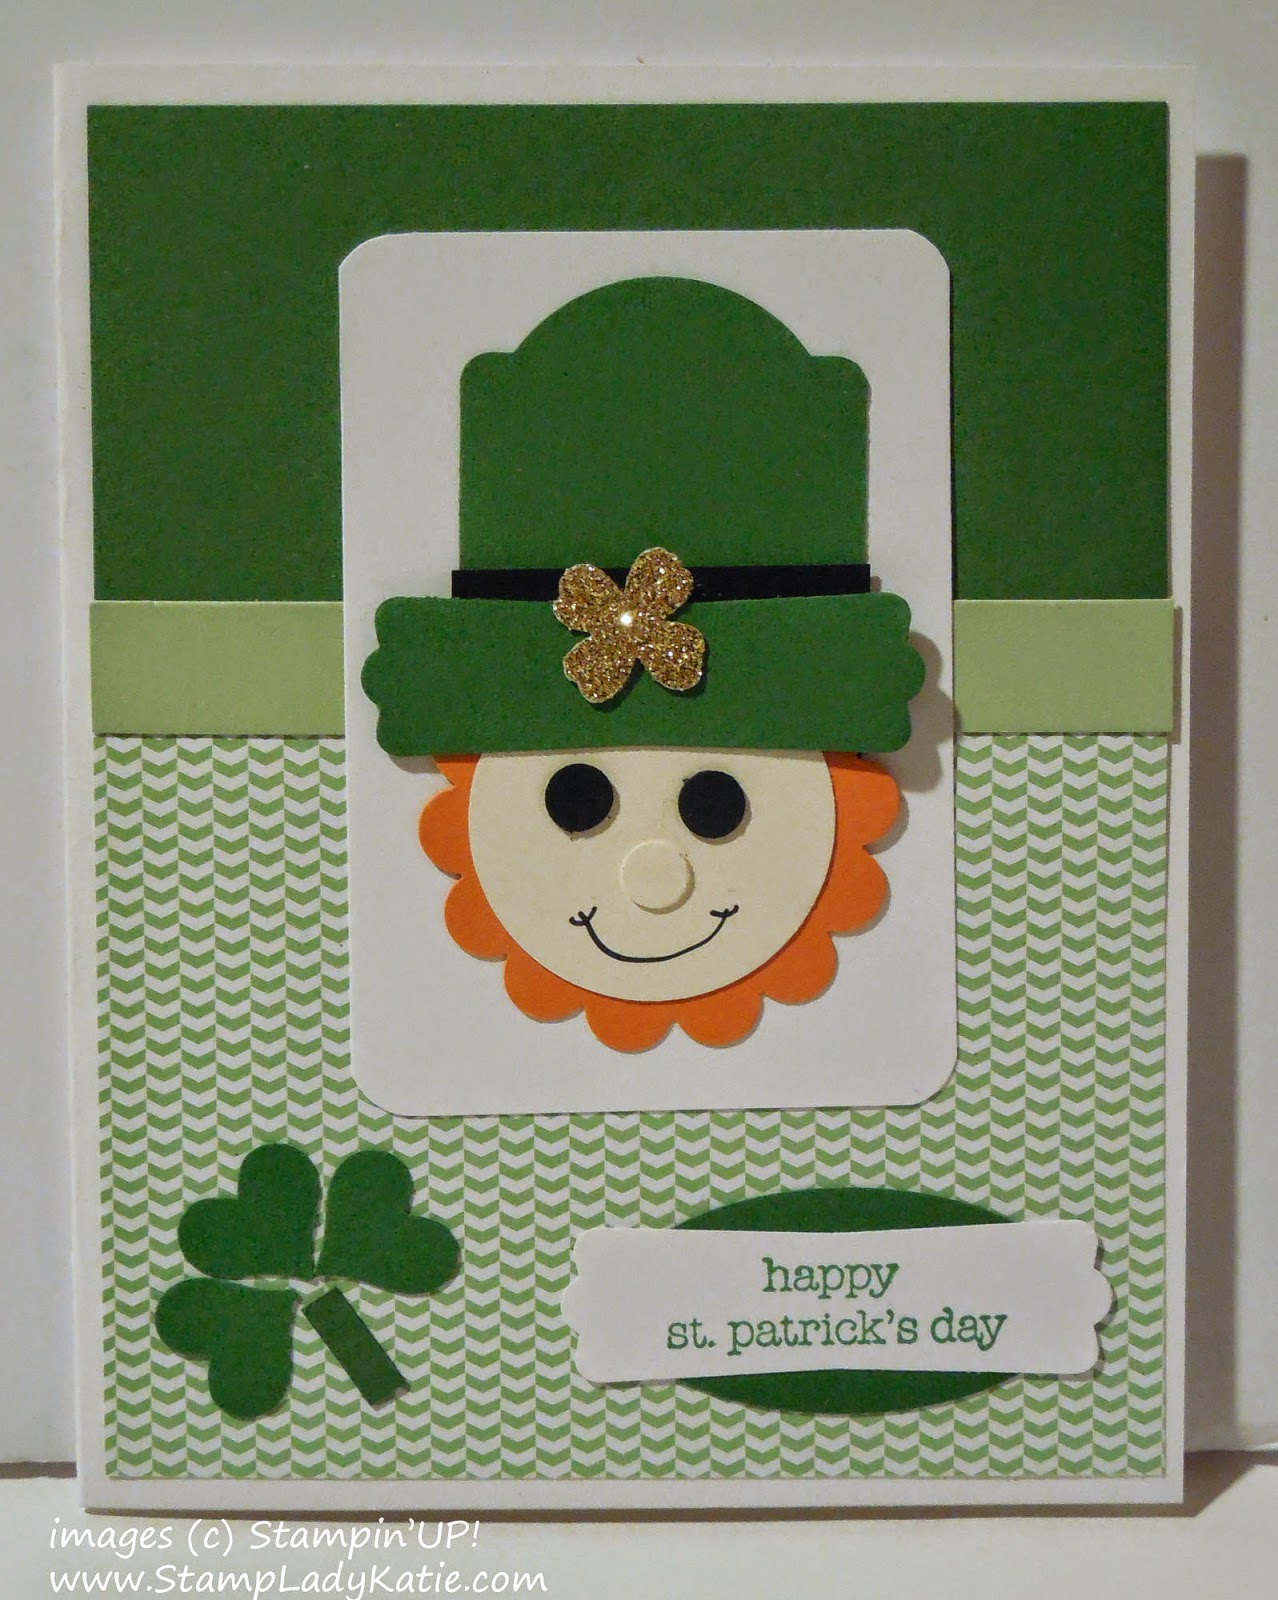 StampLadyKatie.com: Leprechaun Punch Art Card for St. Patrick's Day